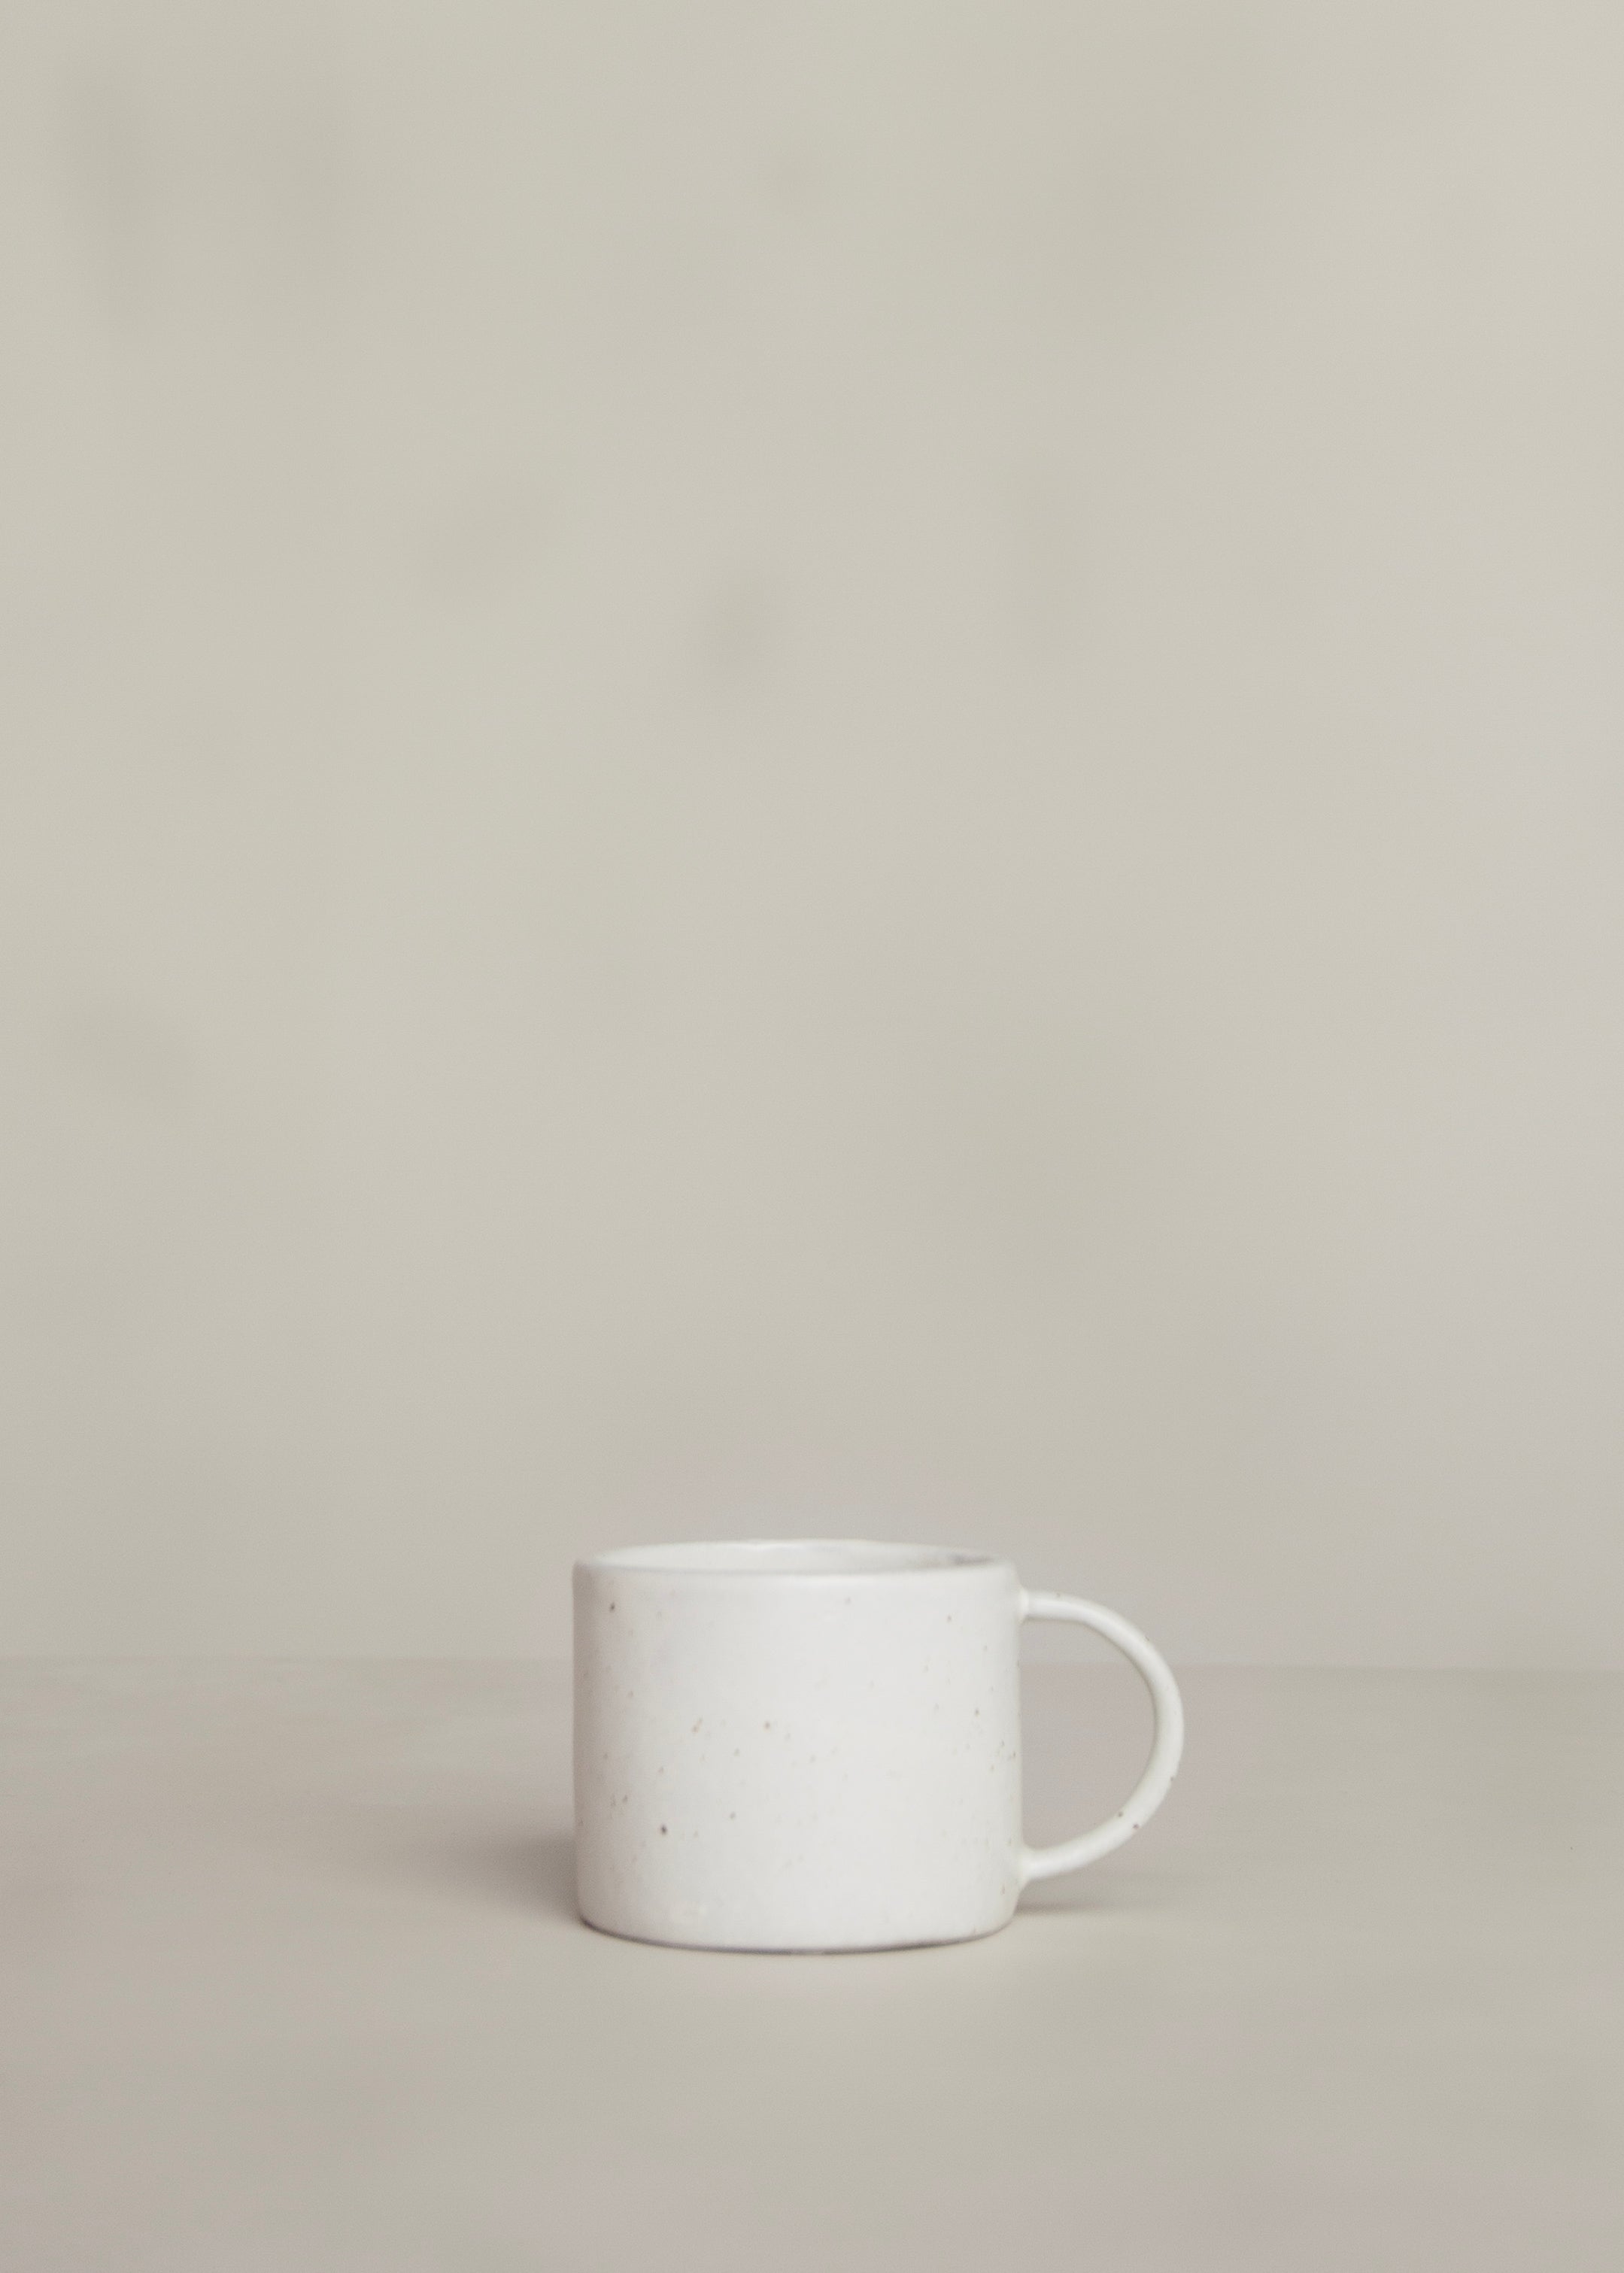 Agni Cup / Speckled White